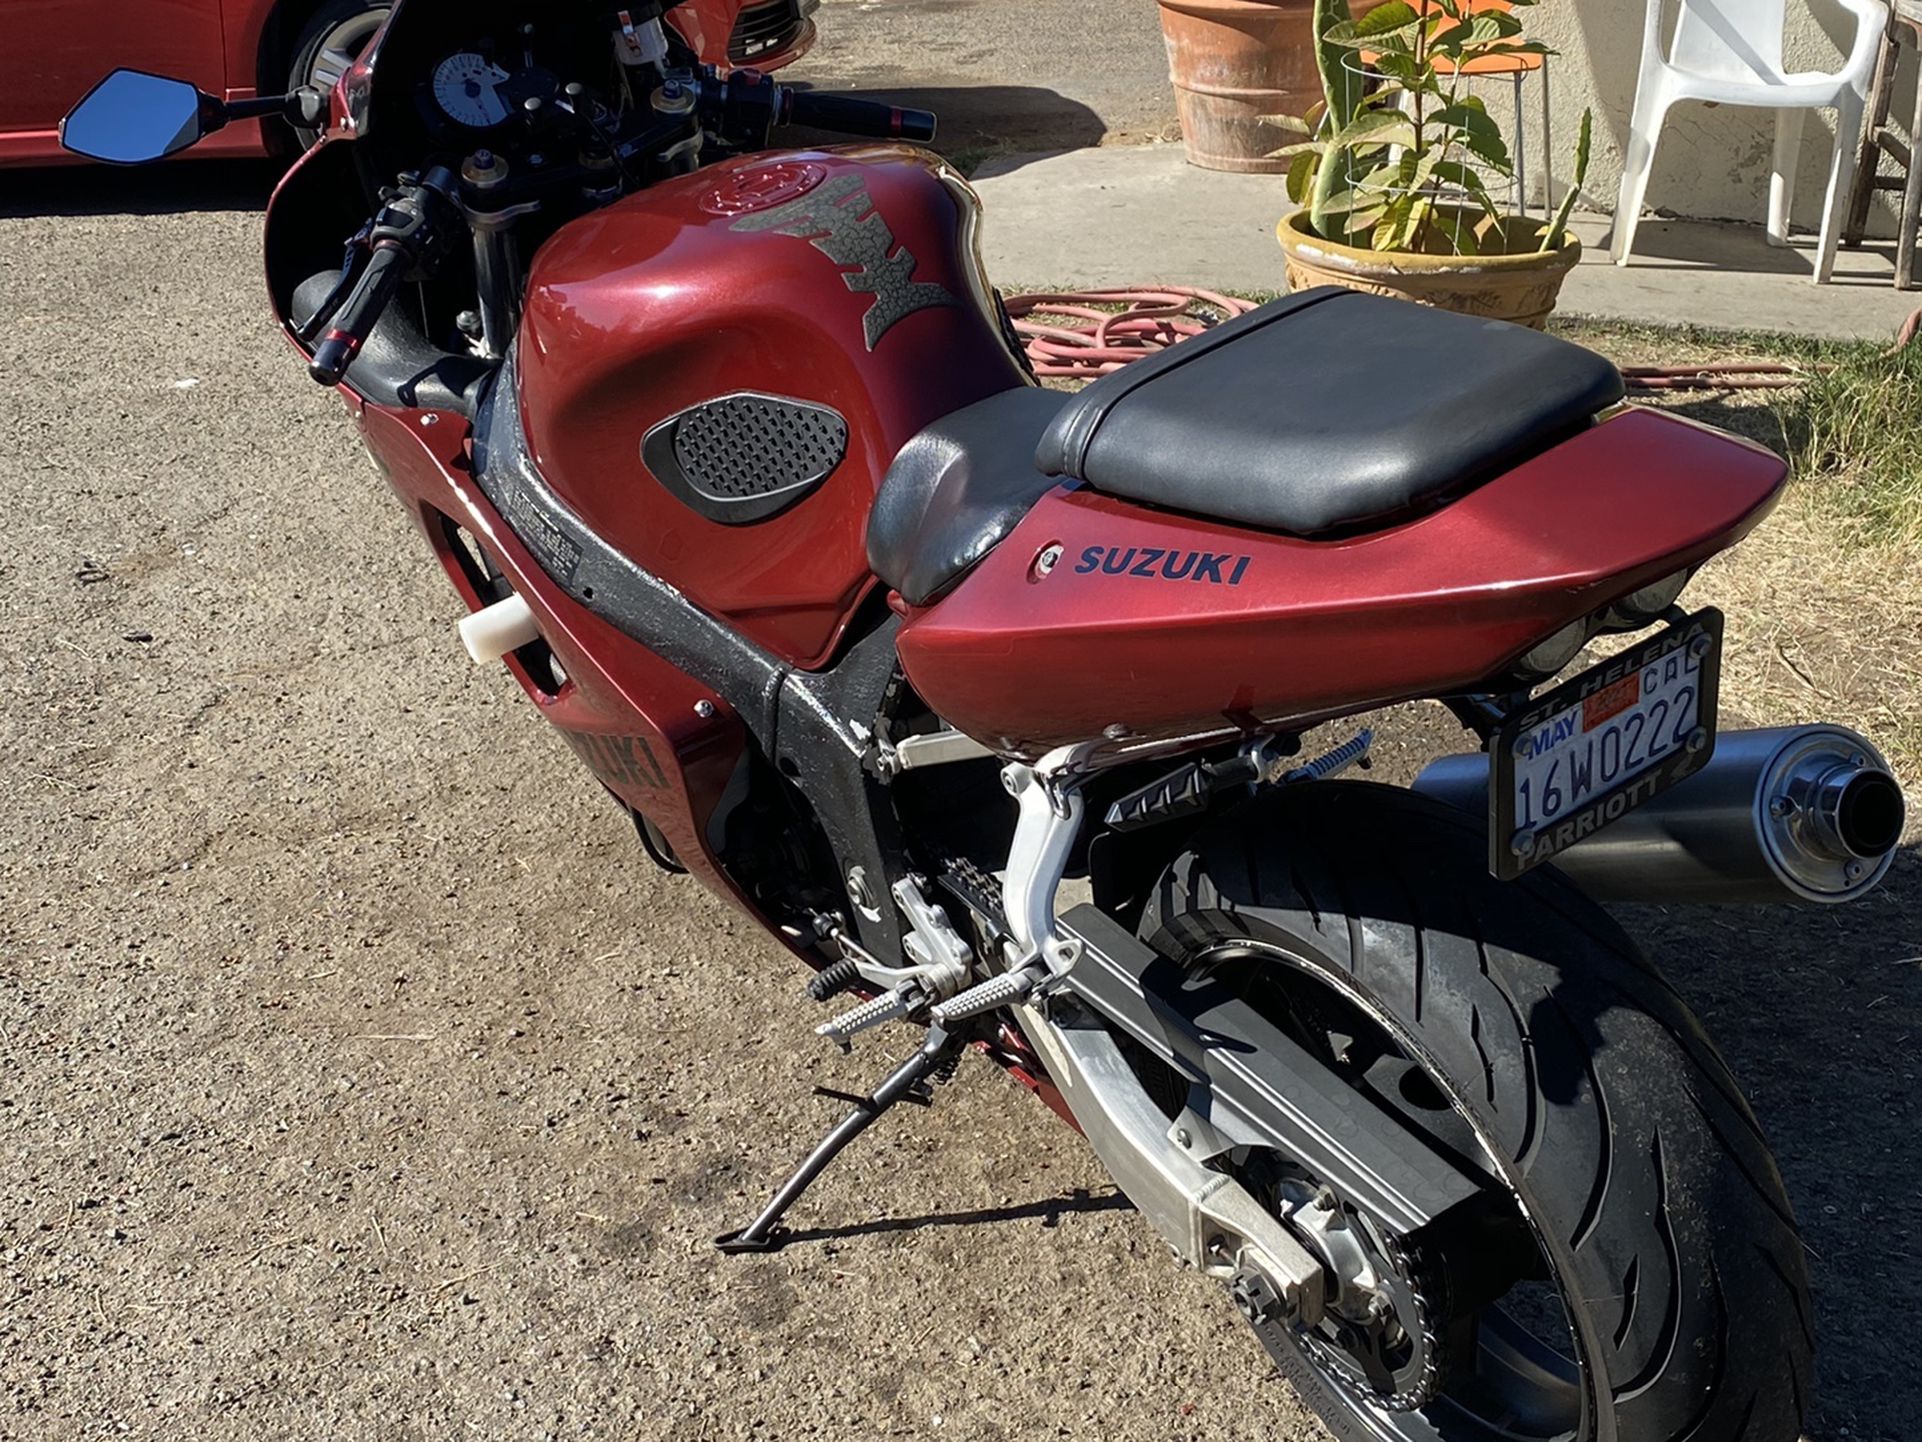 GSXR 600 Motorcycle